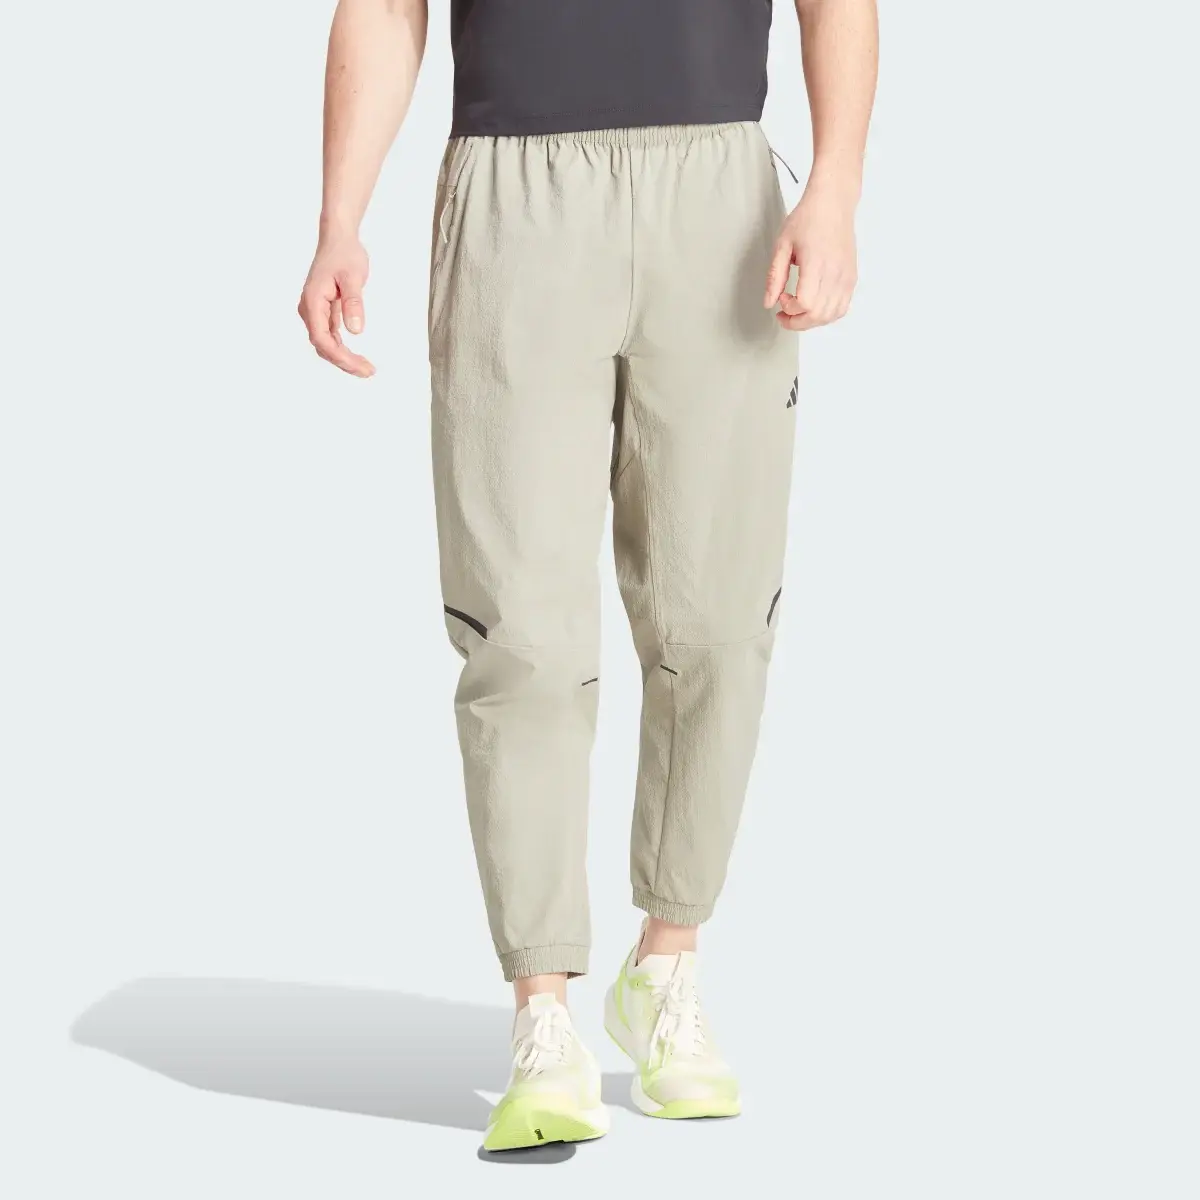 Adidas Pantaloni Designed for Training adistrong Workout. 2